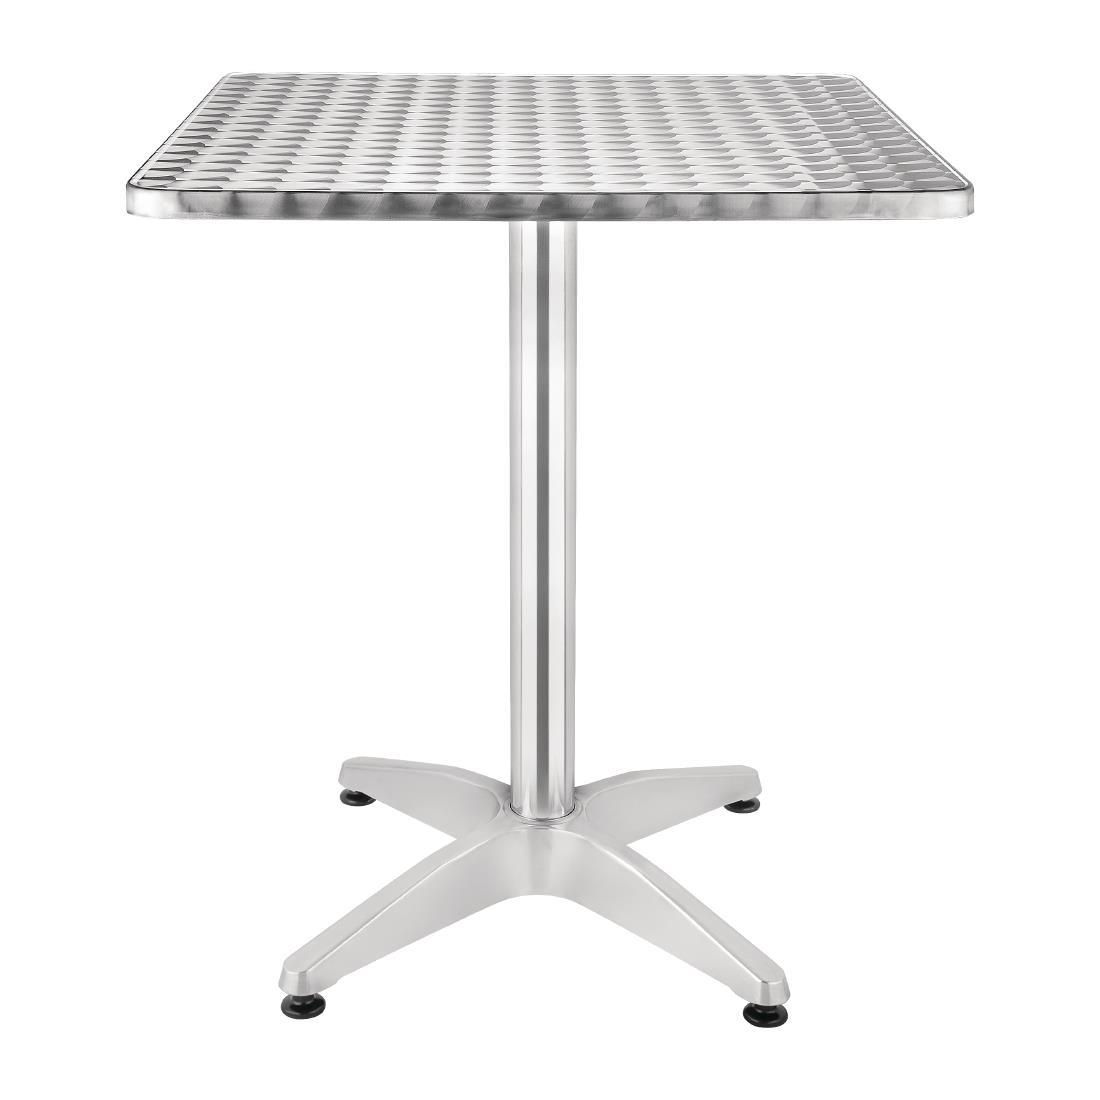 Bolero Square Bistro Table Stainless Steel 600mm - U427  - 1